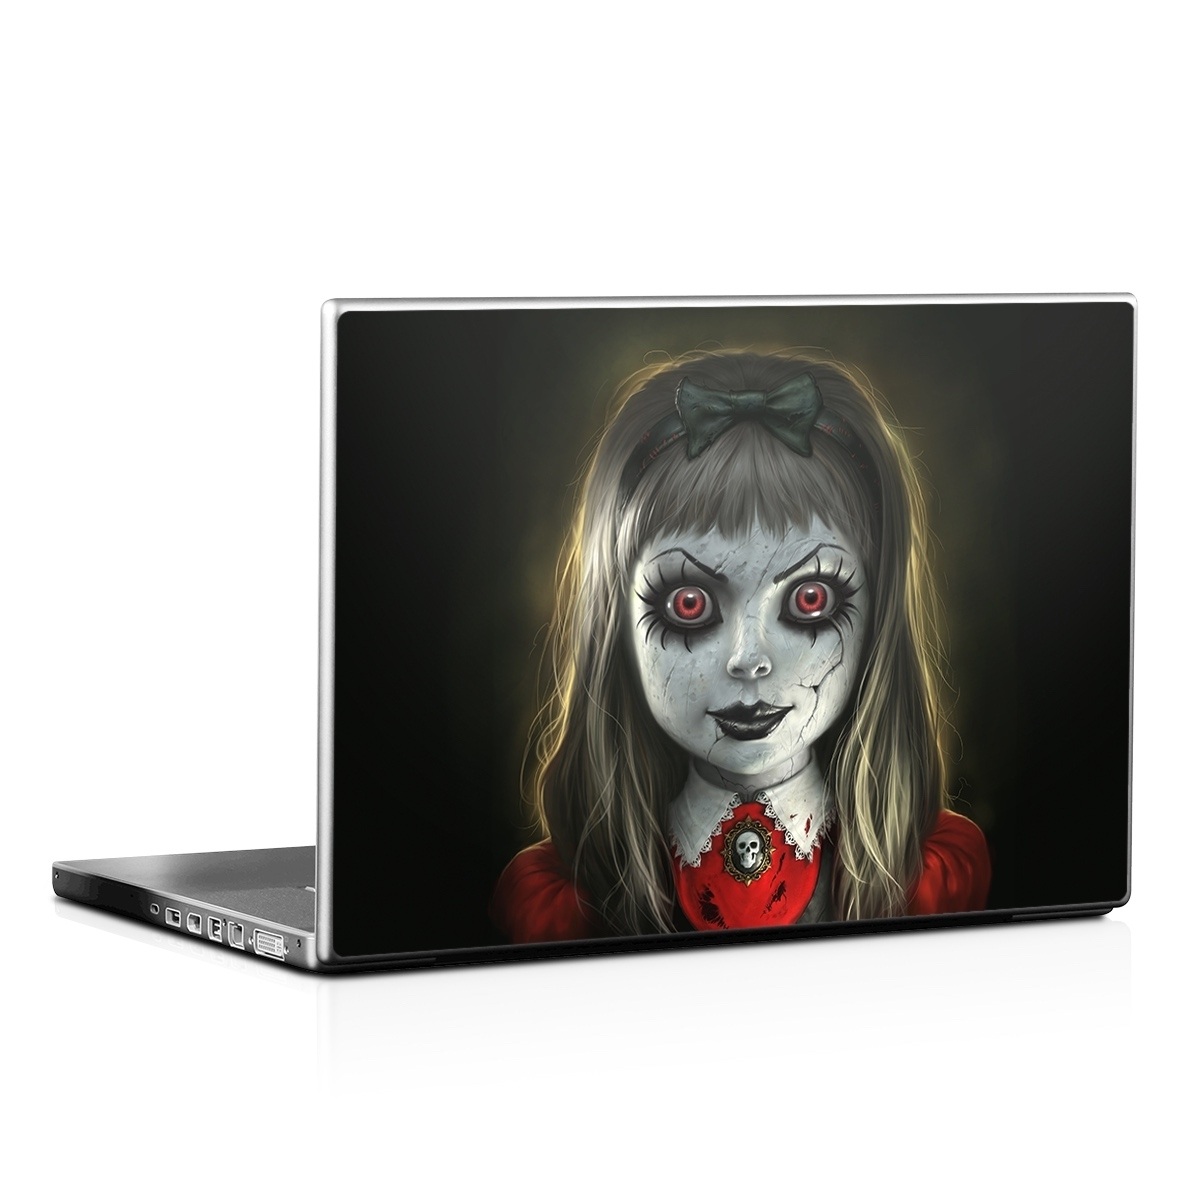 Laptop Skin - Haunted Doll (Image 1)